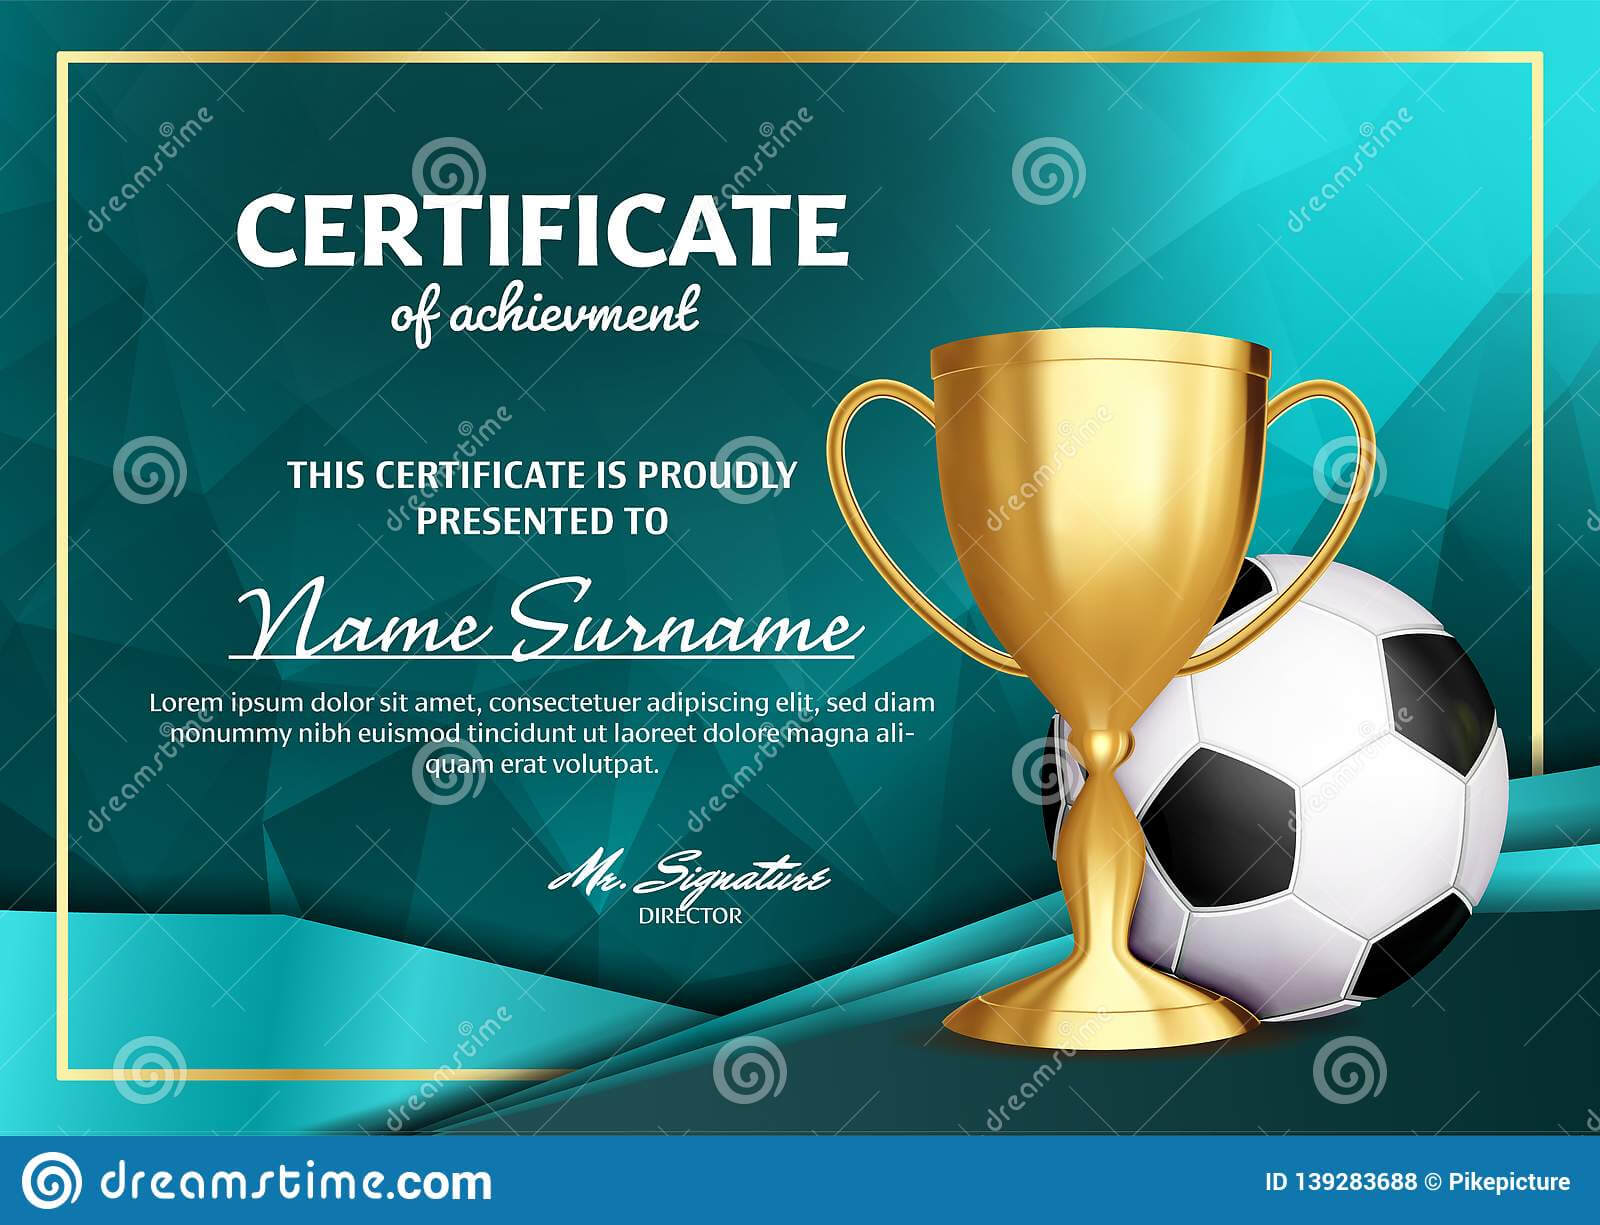 soccer-certificate-diploma-with-golden-cup-vector-football-regarding-soccer-certificate